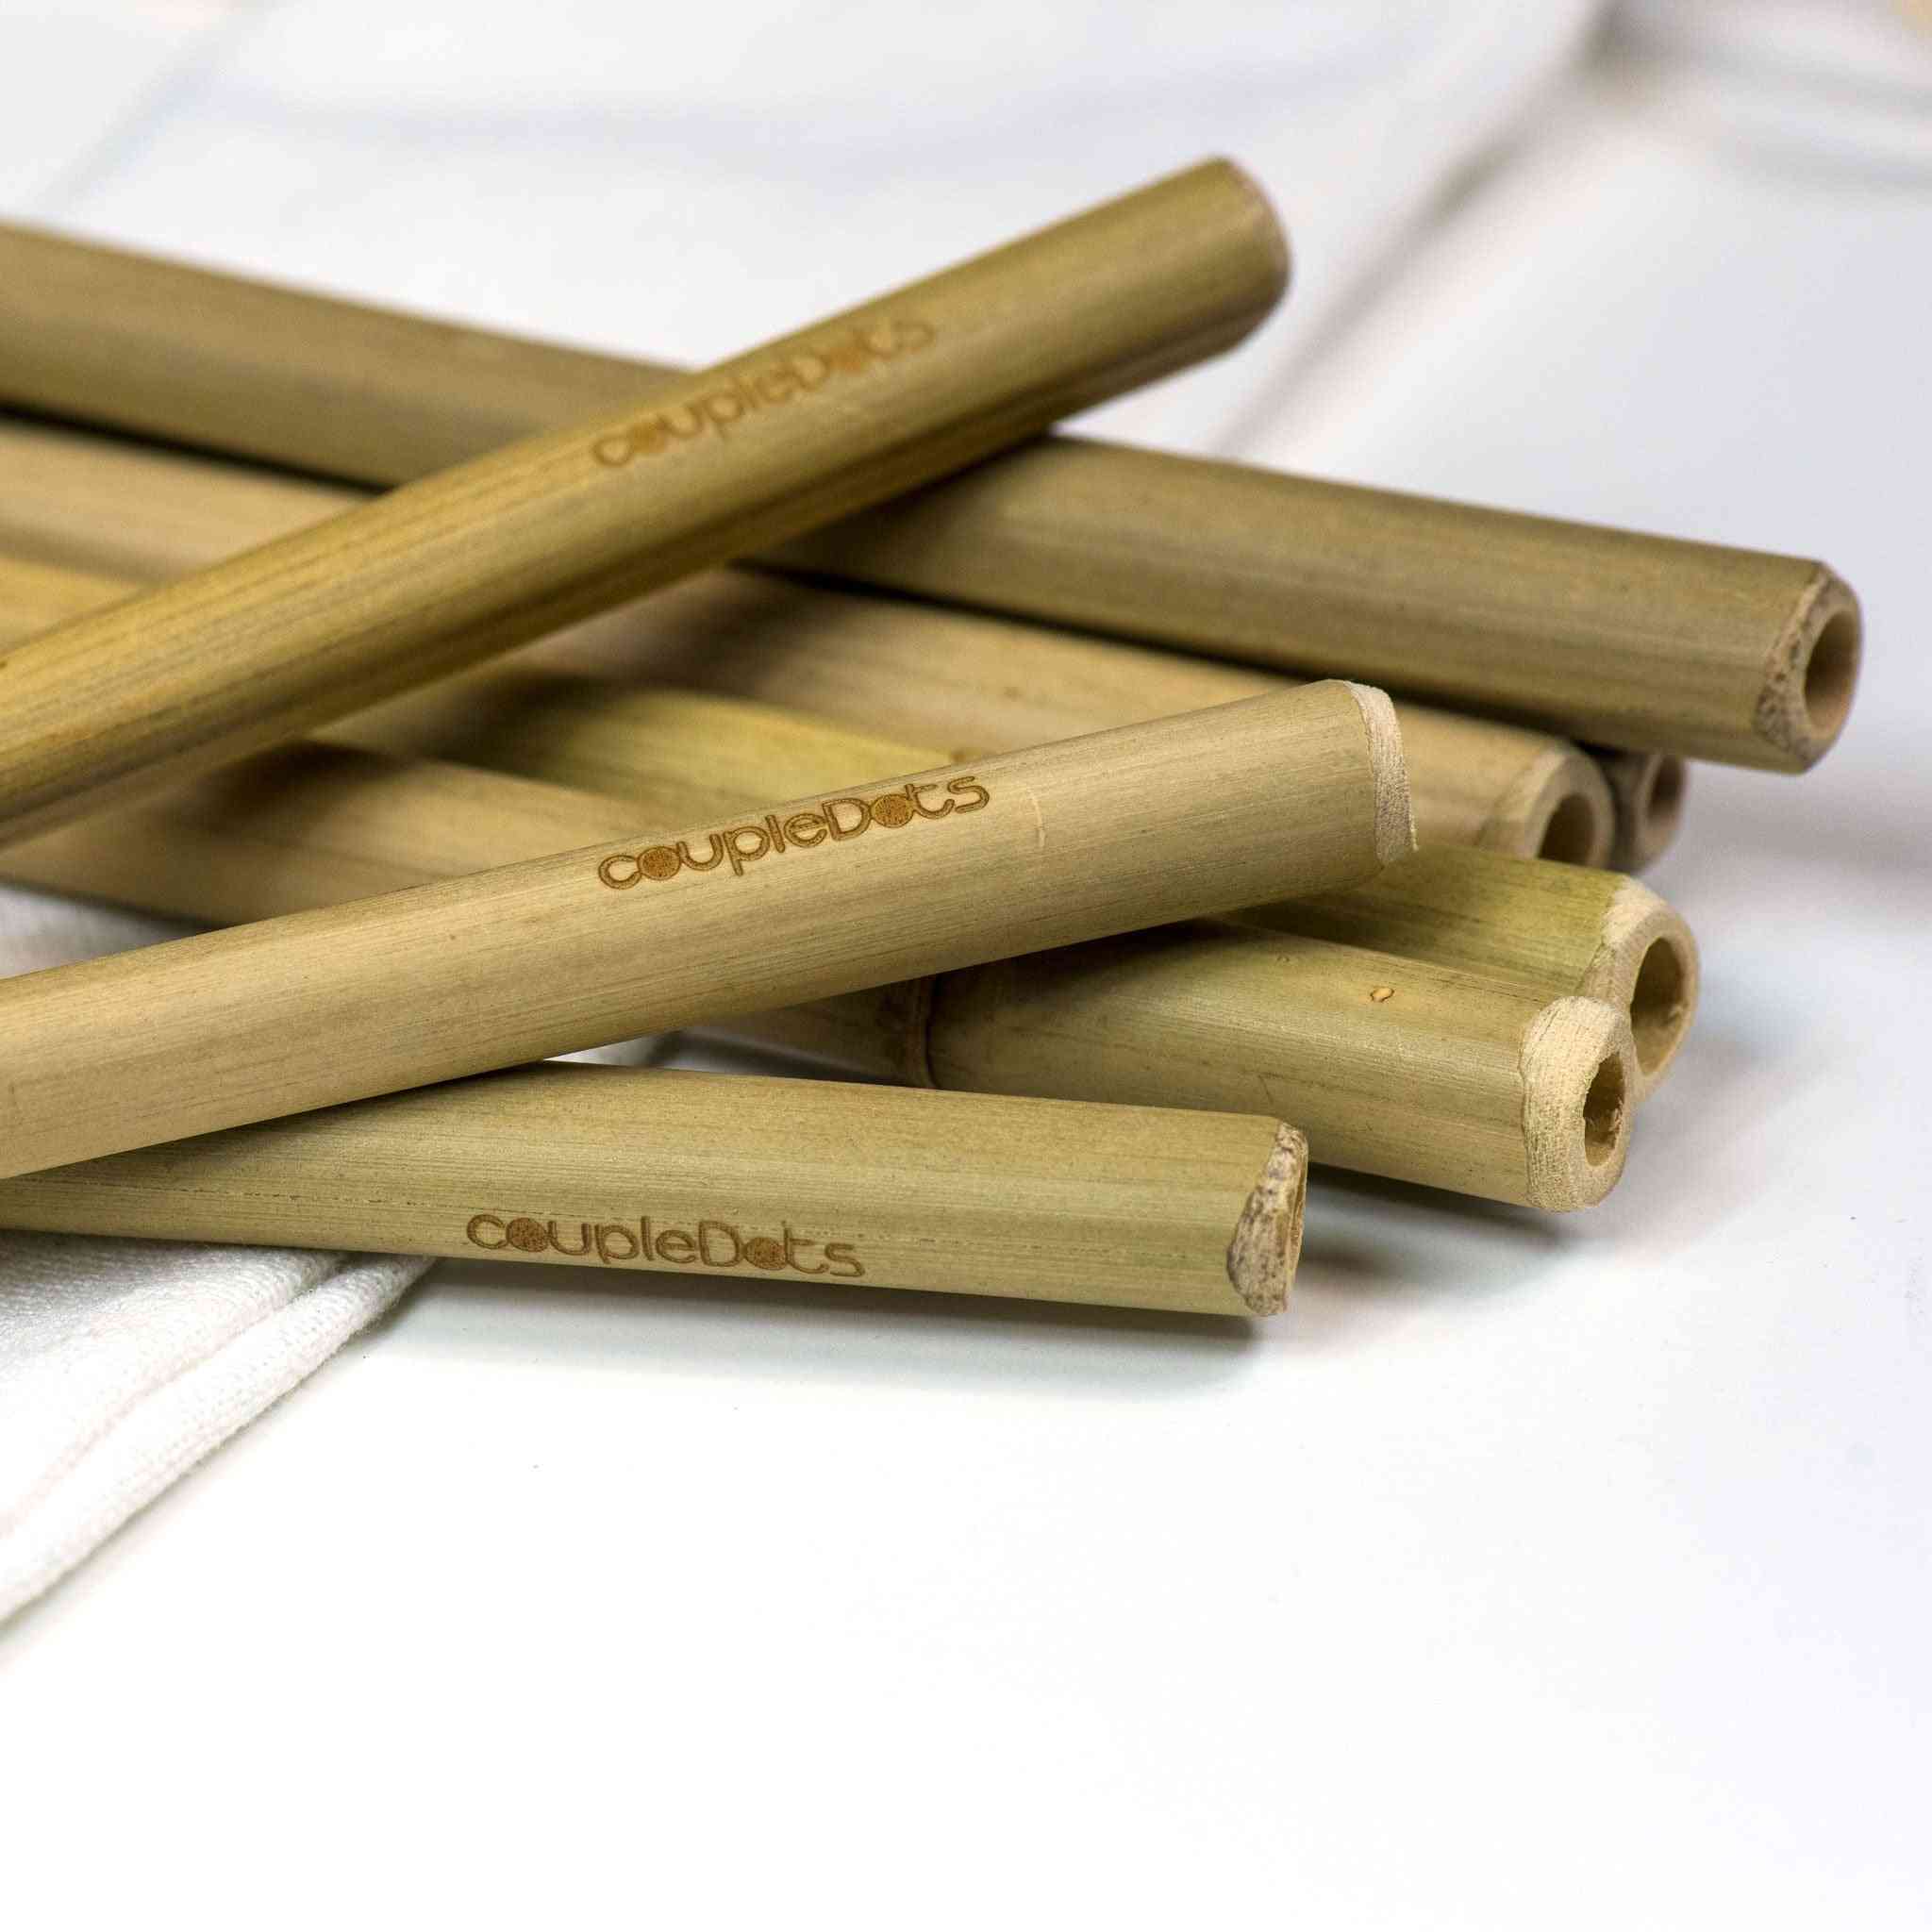 Biologisch afbreekbare bamboe rietjes